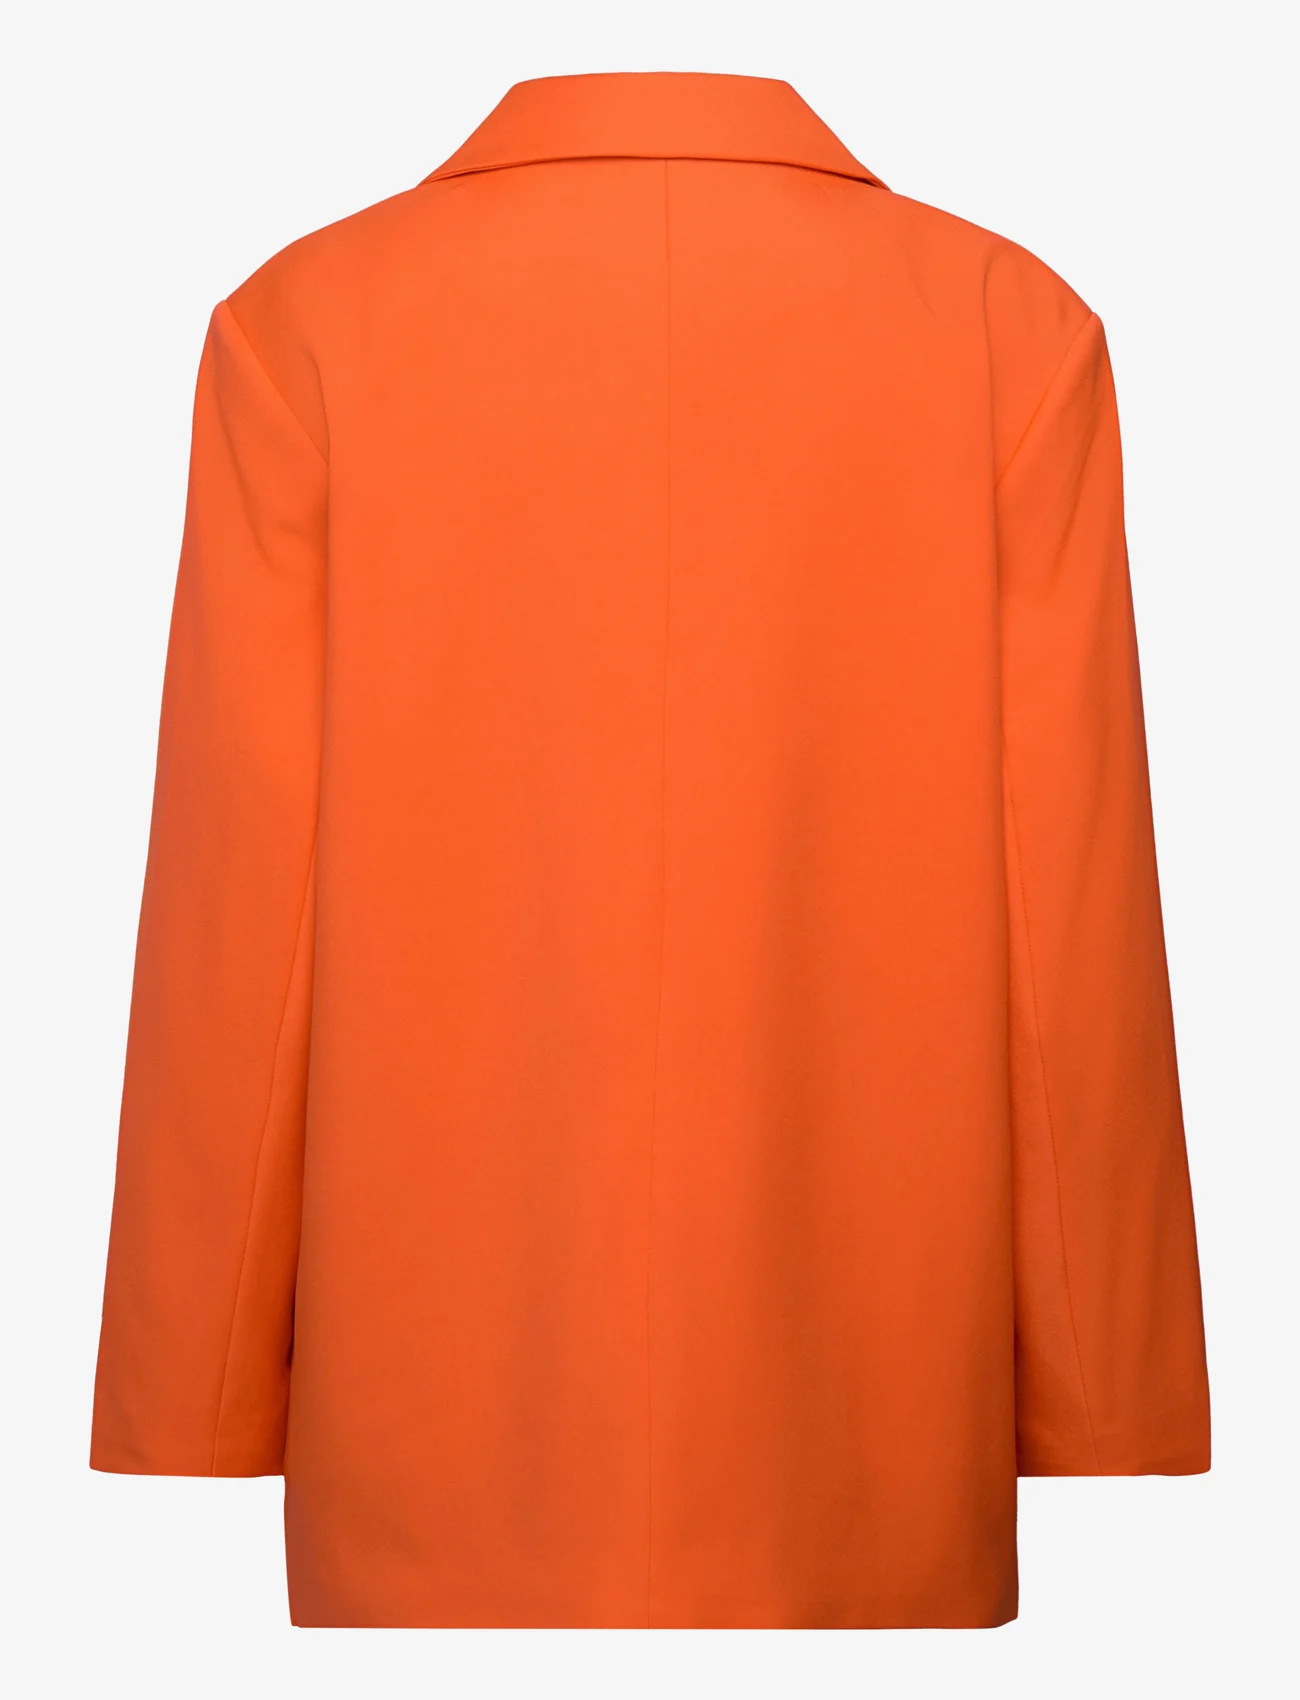 bzr - Vibe Baseline blazer - party wear at outlet prices - orange flame - 1